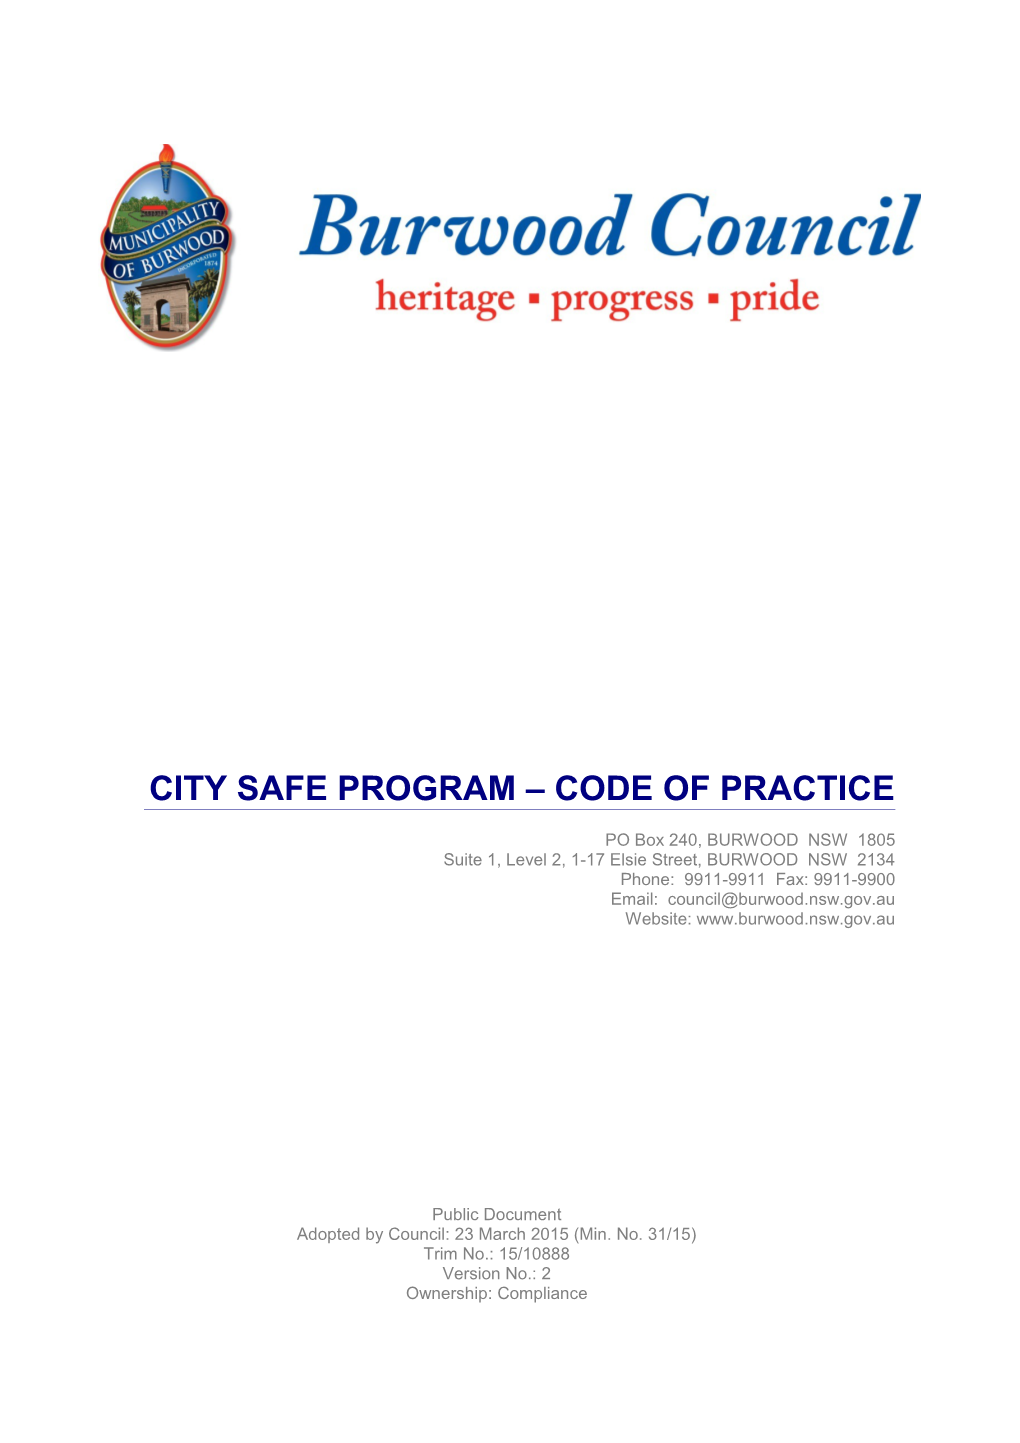 City Safe Program Code of Practice